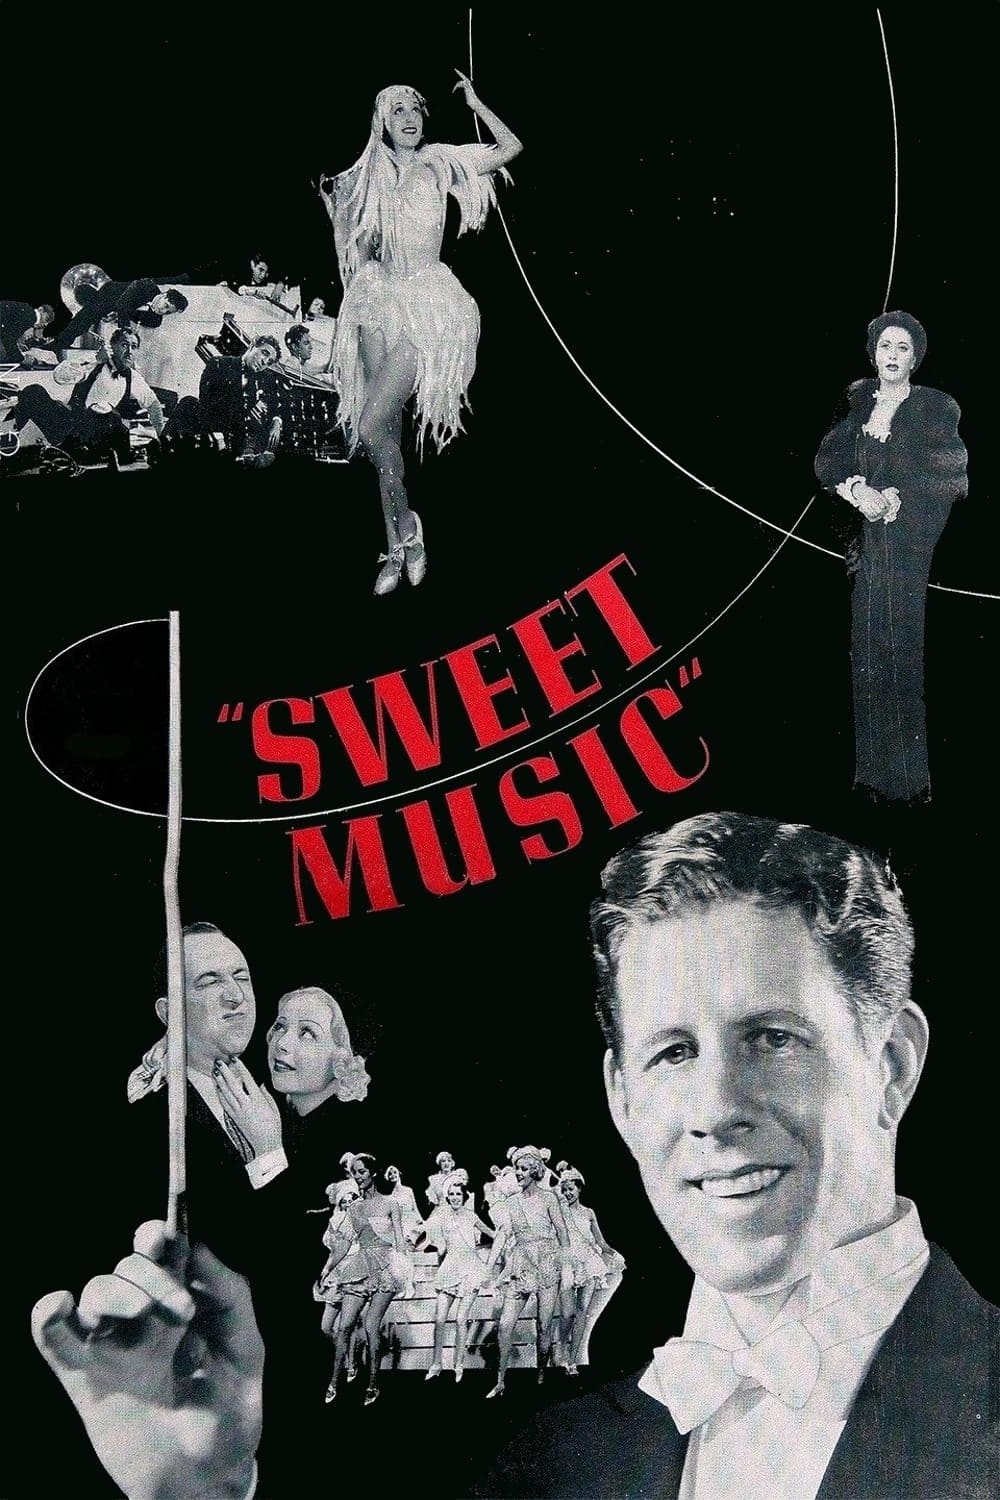 Sweet Music (1935)